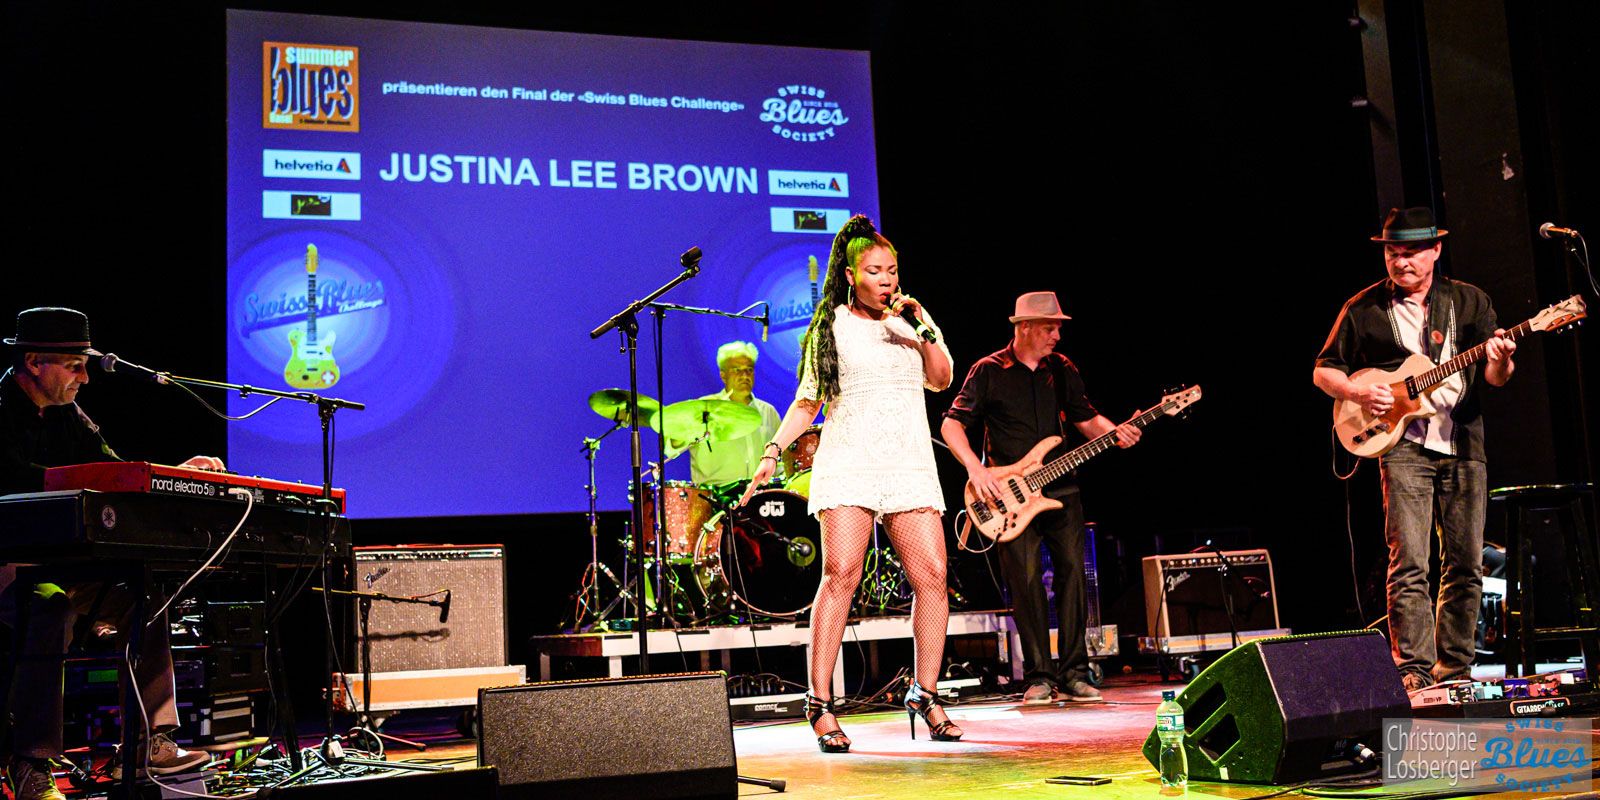 Justina Lee Brown vince lo Swiss Blues Challenge 2019!